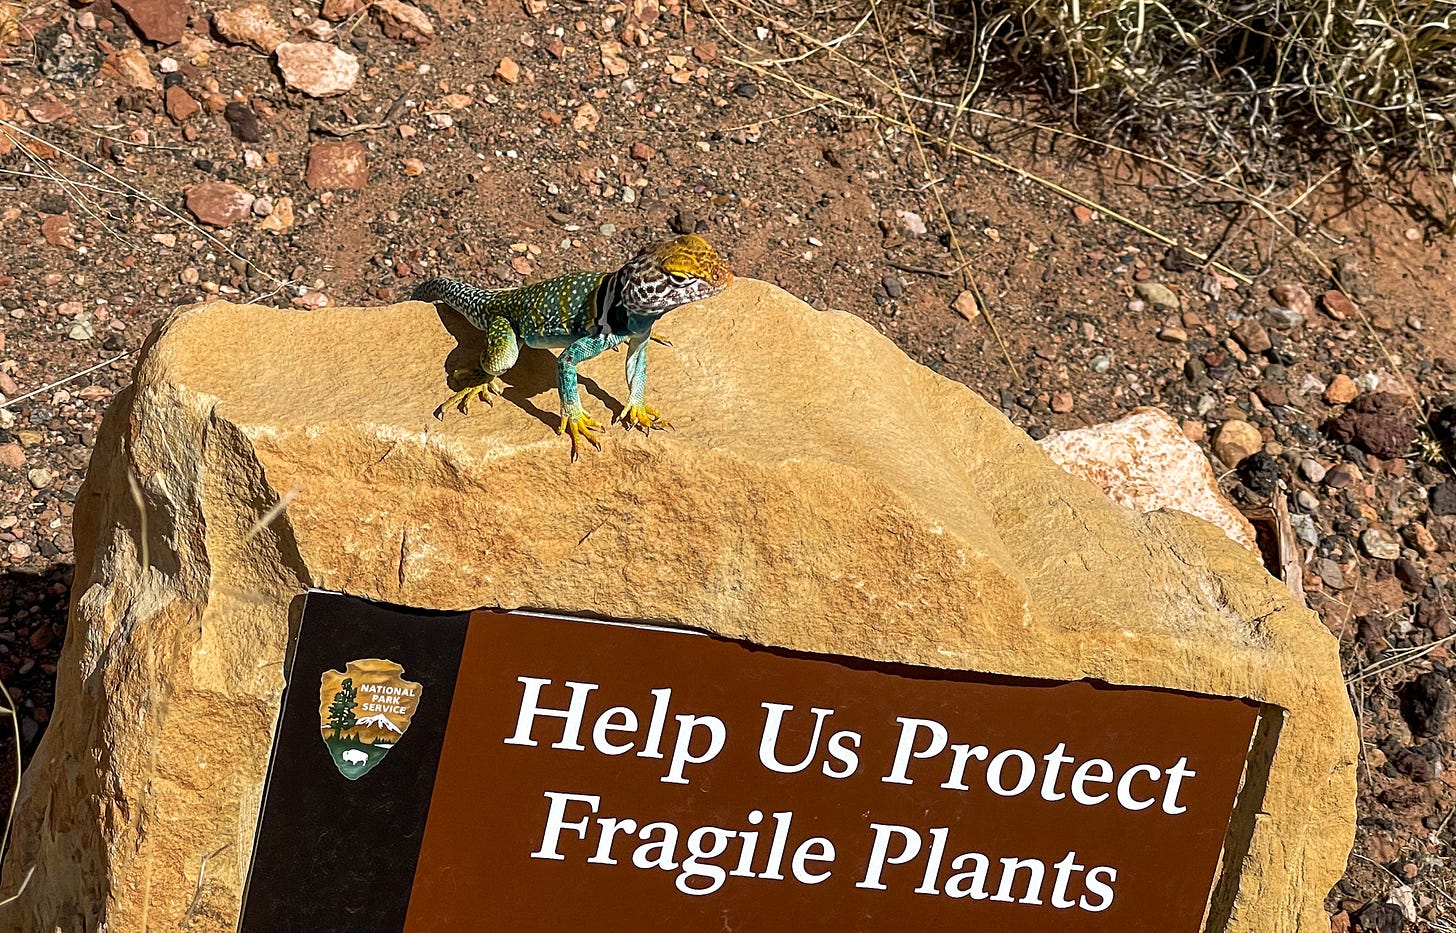 Collared lizard at Wupatki National Monument in Arizona